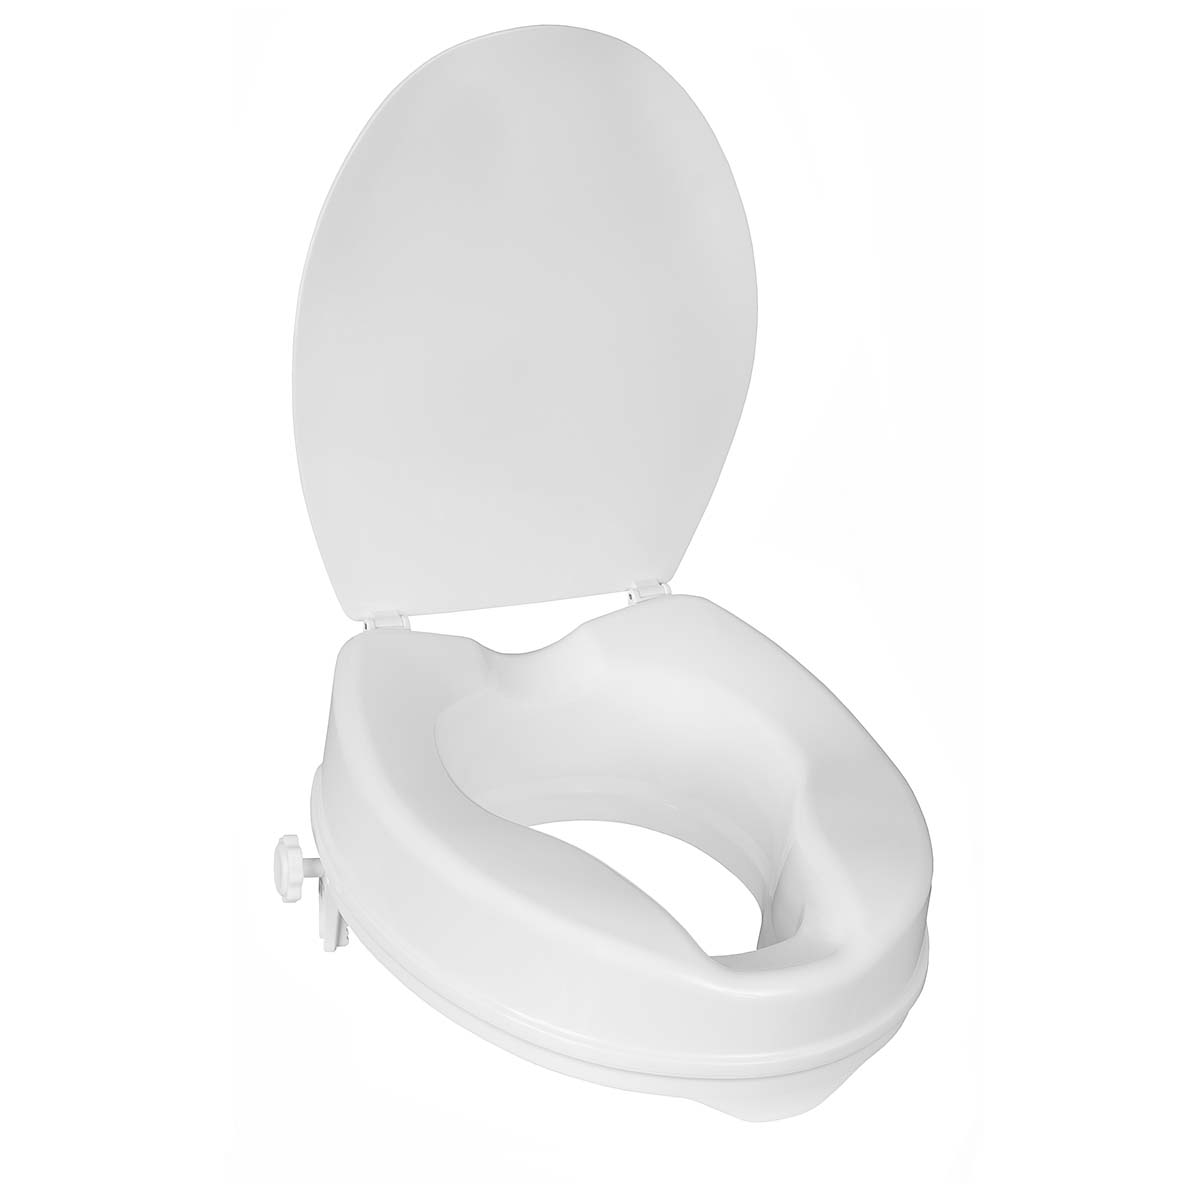 Toilet Seat Raiser with lid